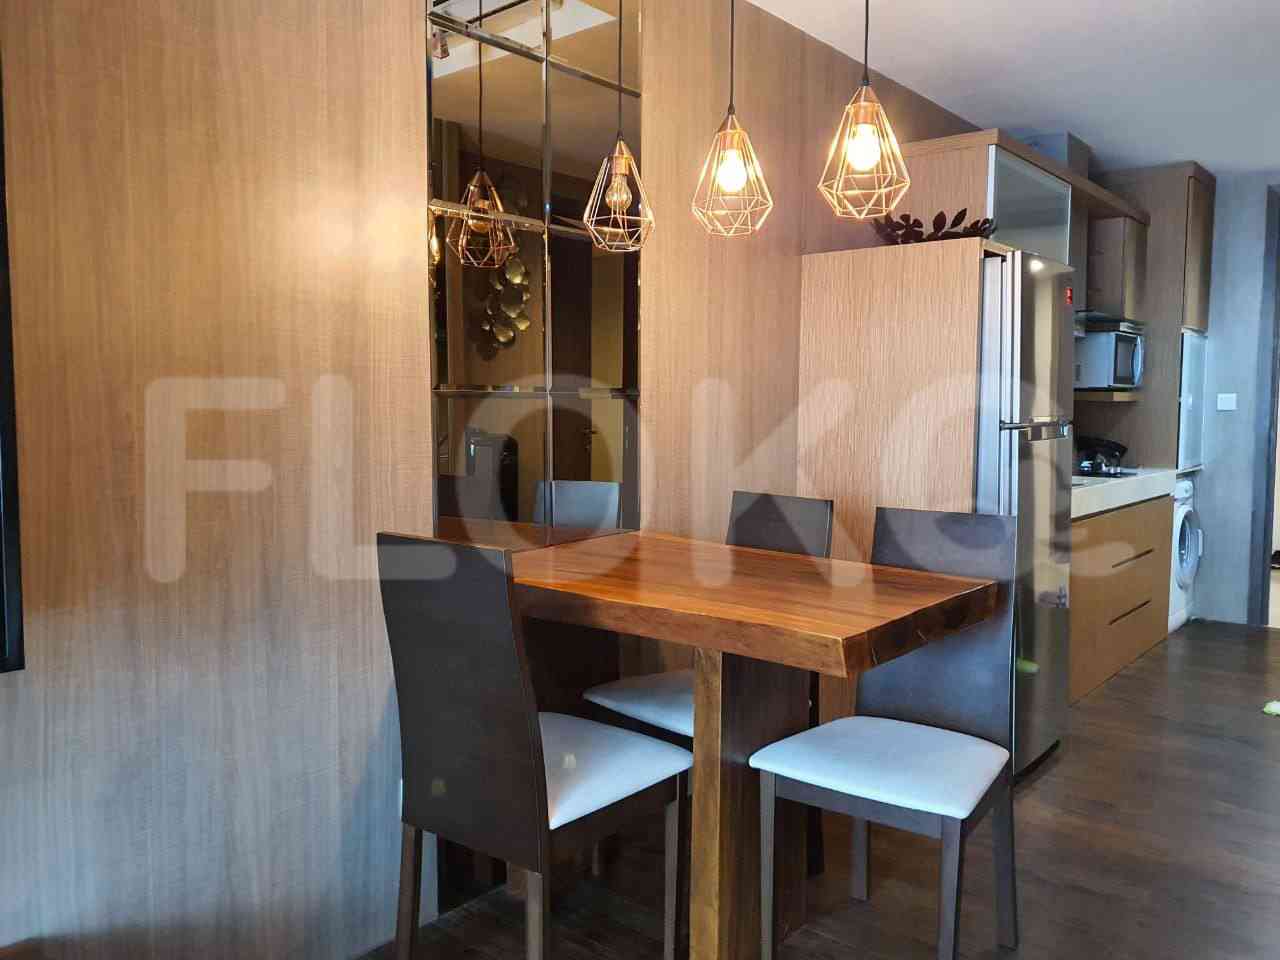 1 Bedroom on 12th Floor for Rent in Kemang Village Residence - fkea1c 6